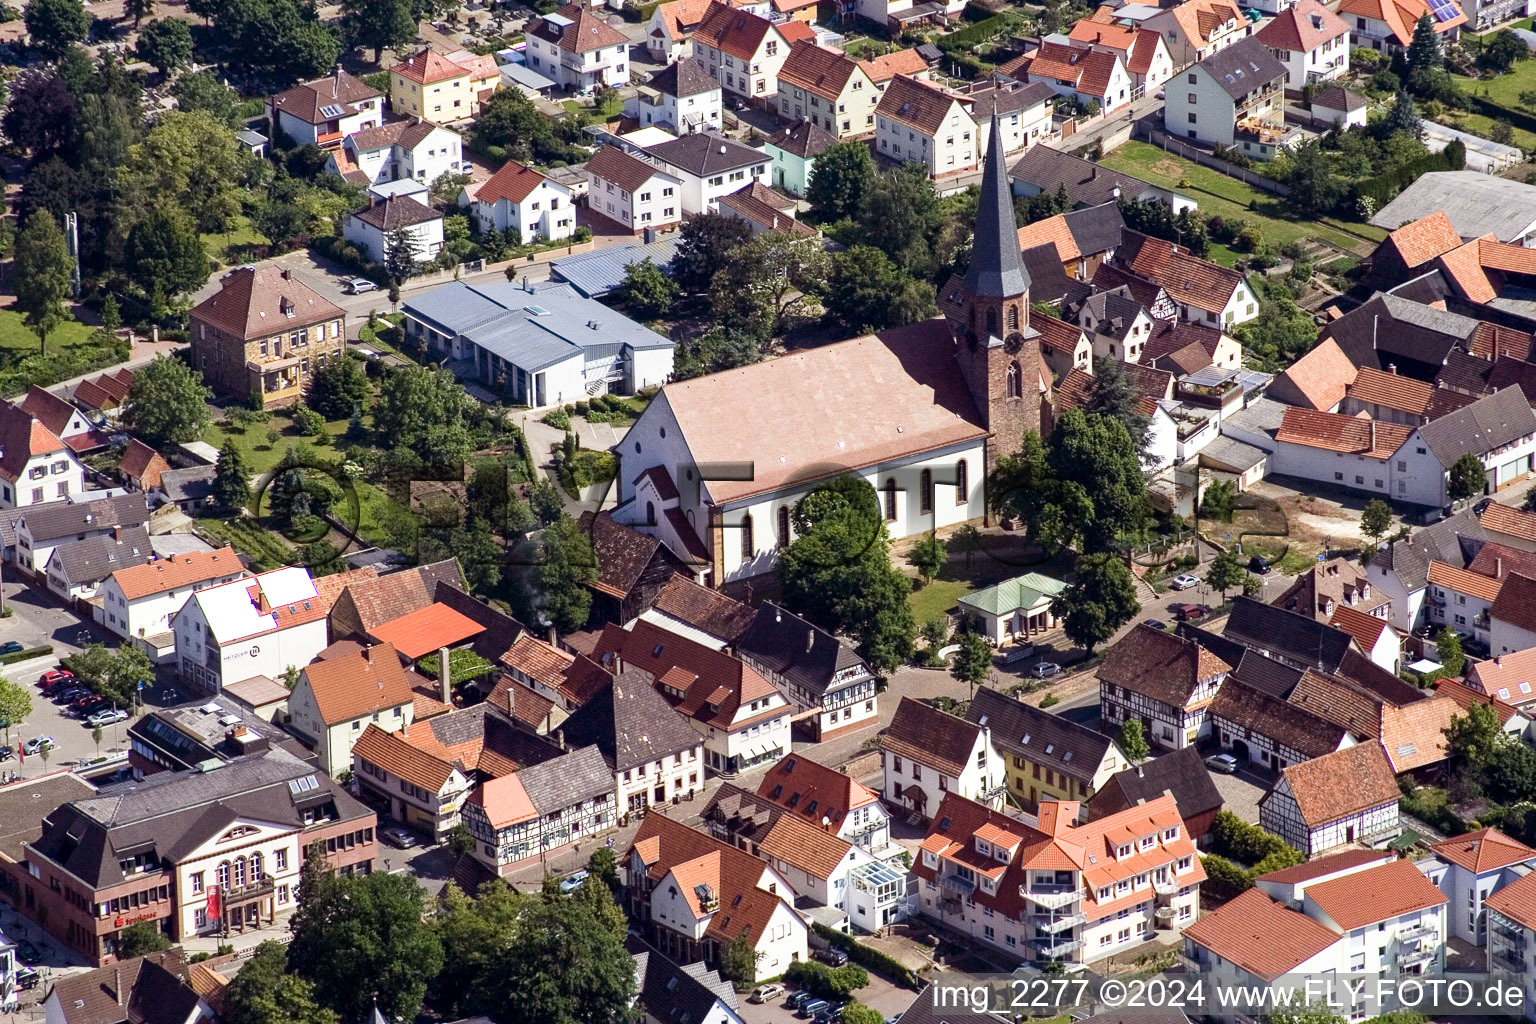 Church building in the village of in Herxheim bei Landau (Pfalz) in the state Rhineland-Palatinate